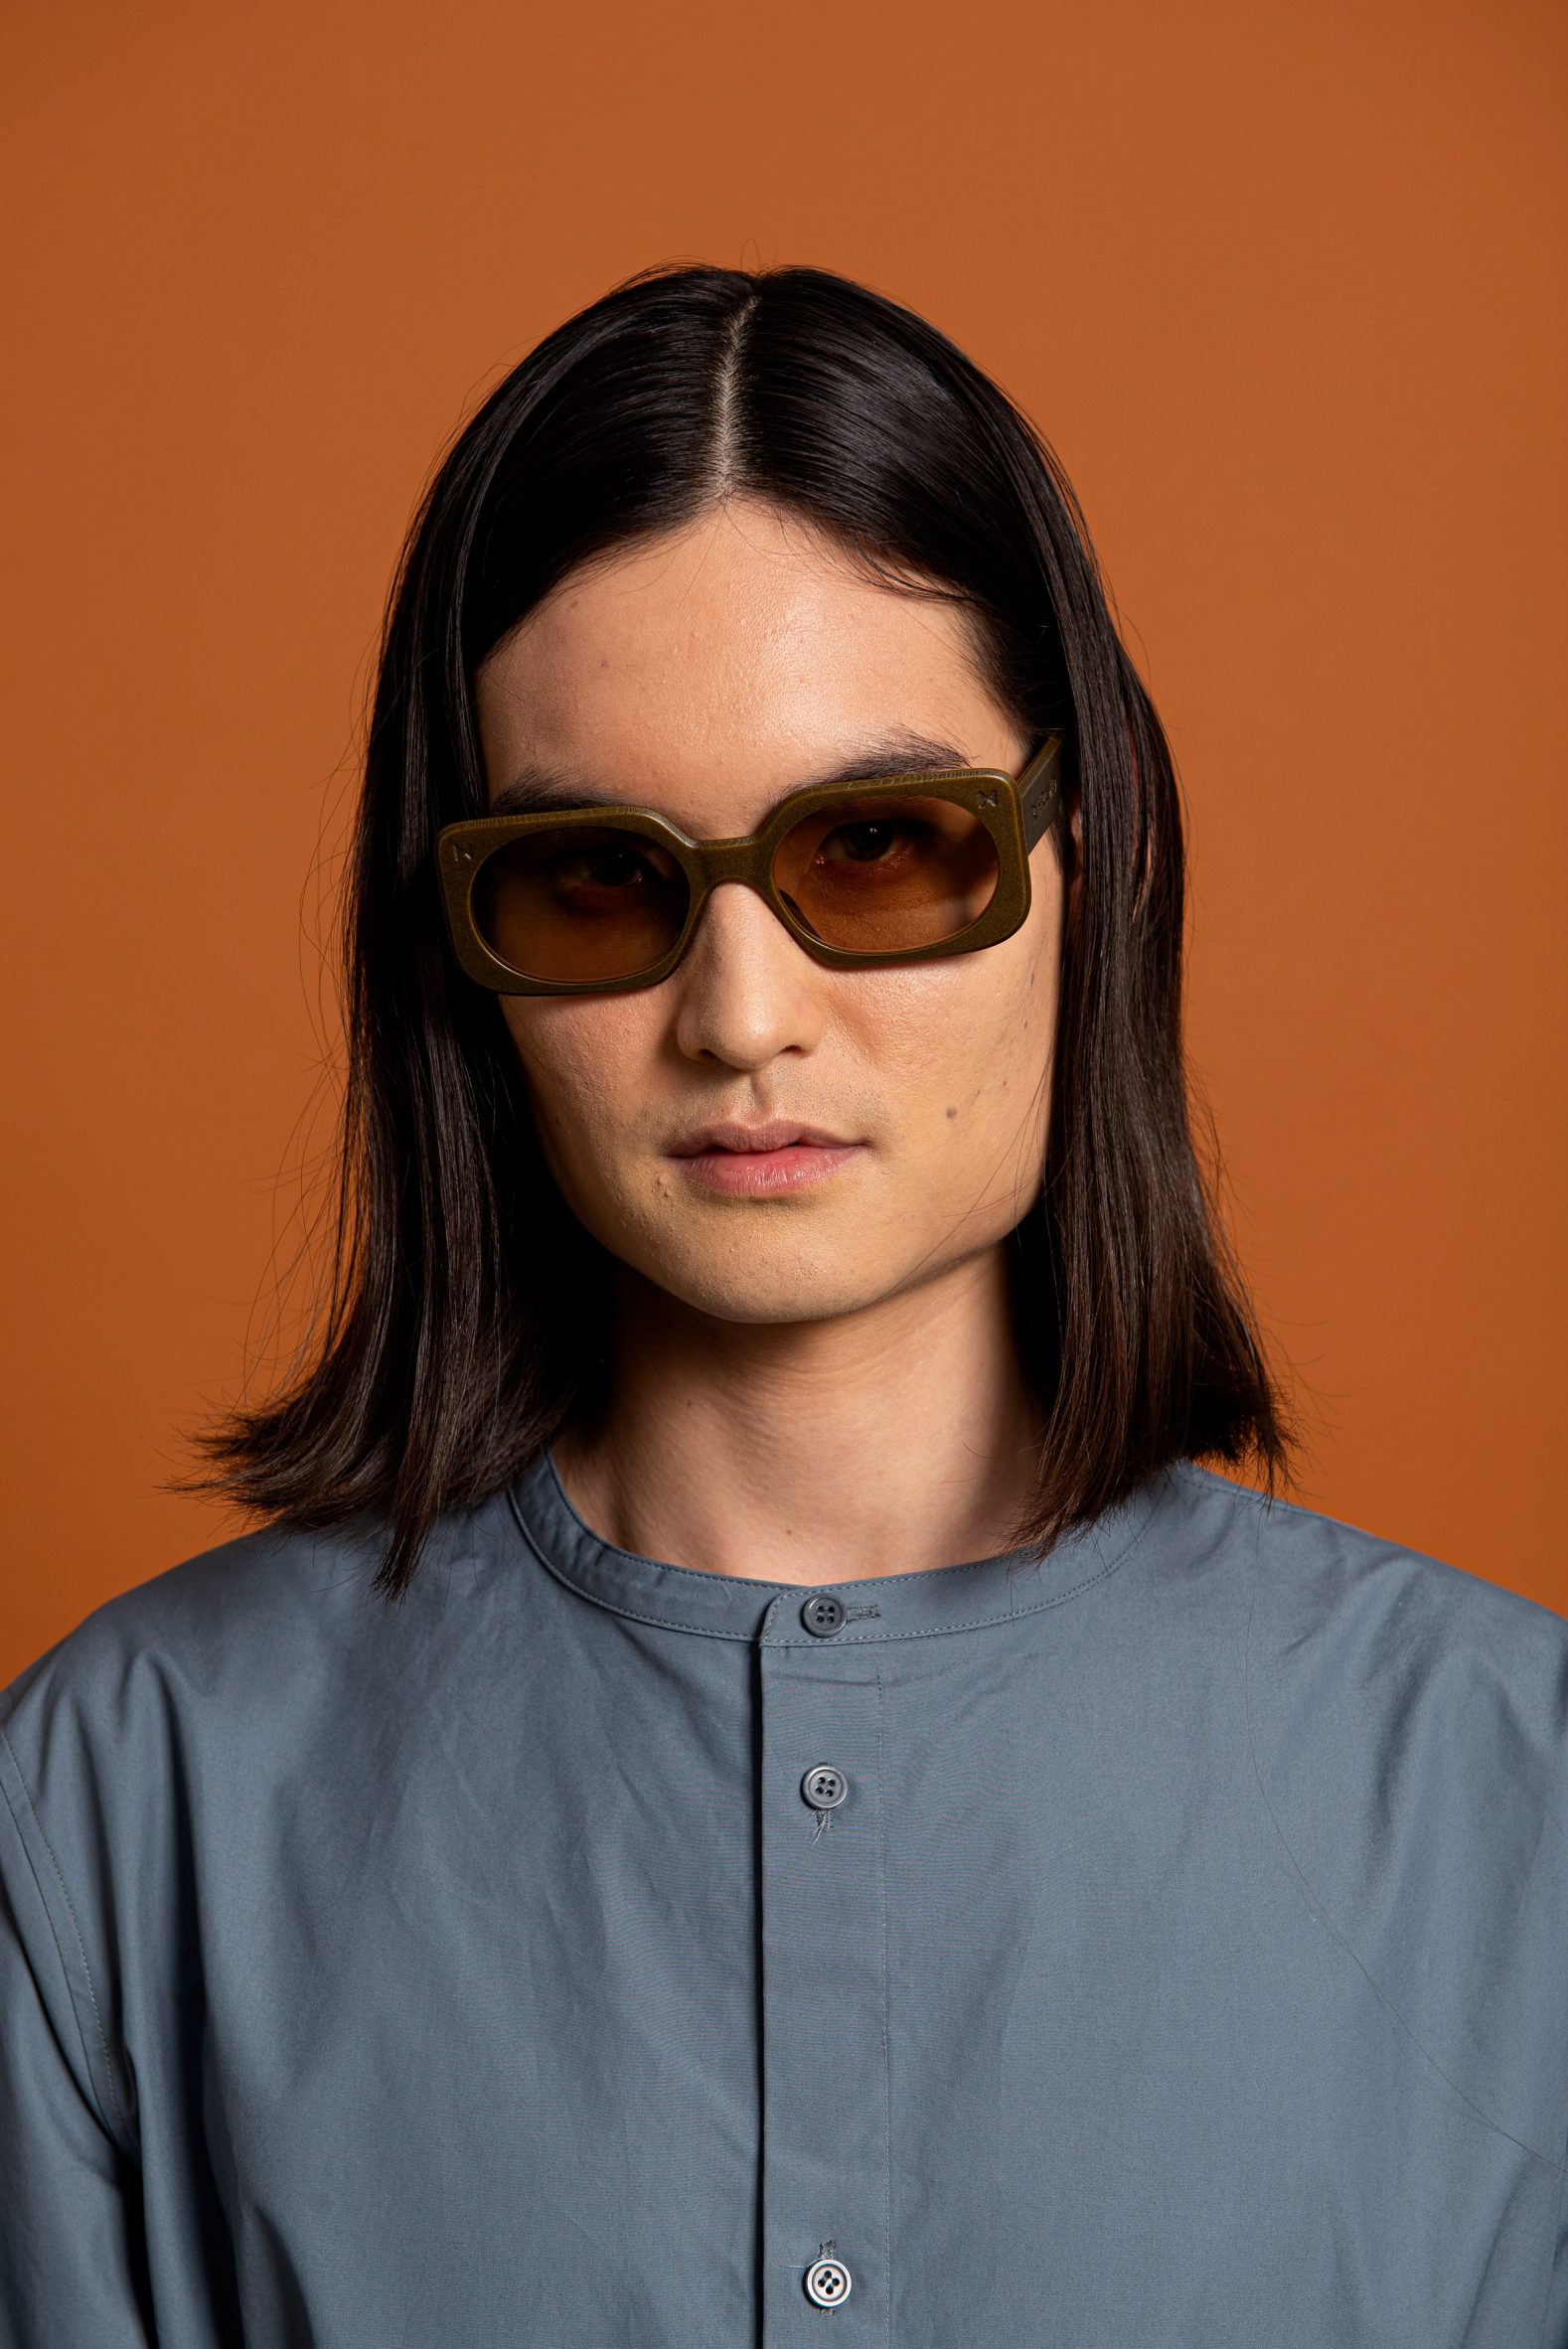 A man wearing rectangular-shaped brown sunglasses